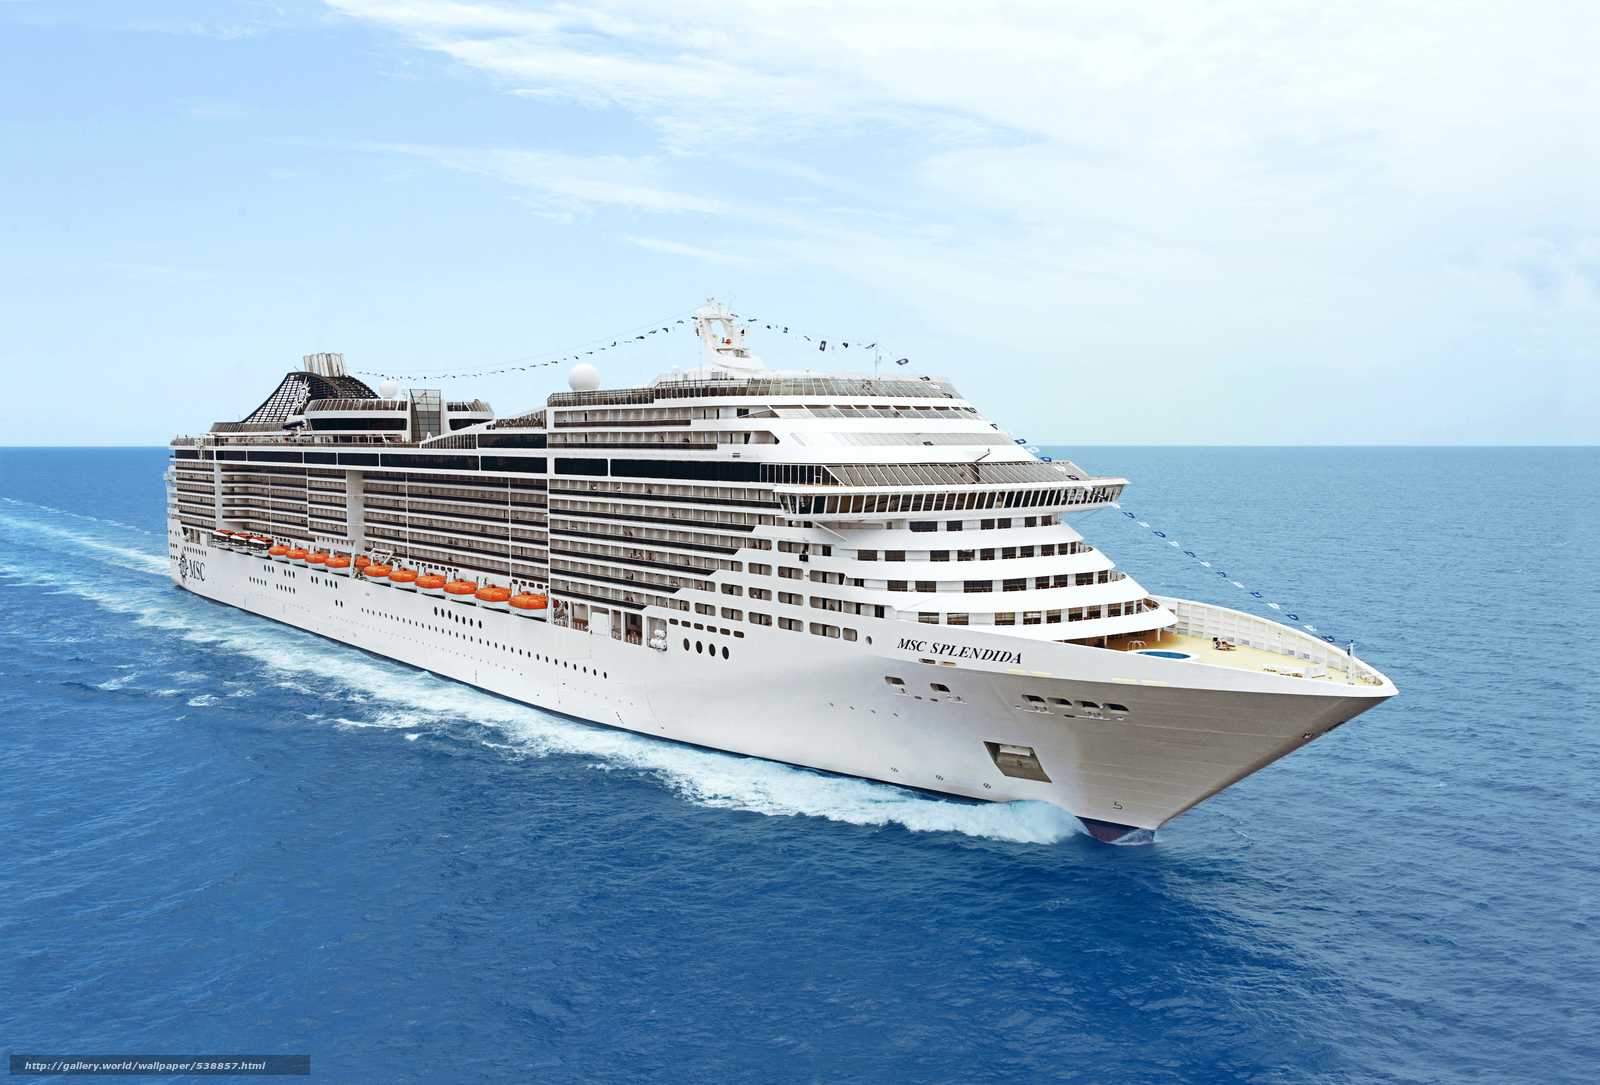 Download wallpaper MSC Splendida Cruise Ship desktop wallpaper 1600x1085